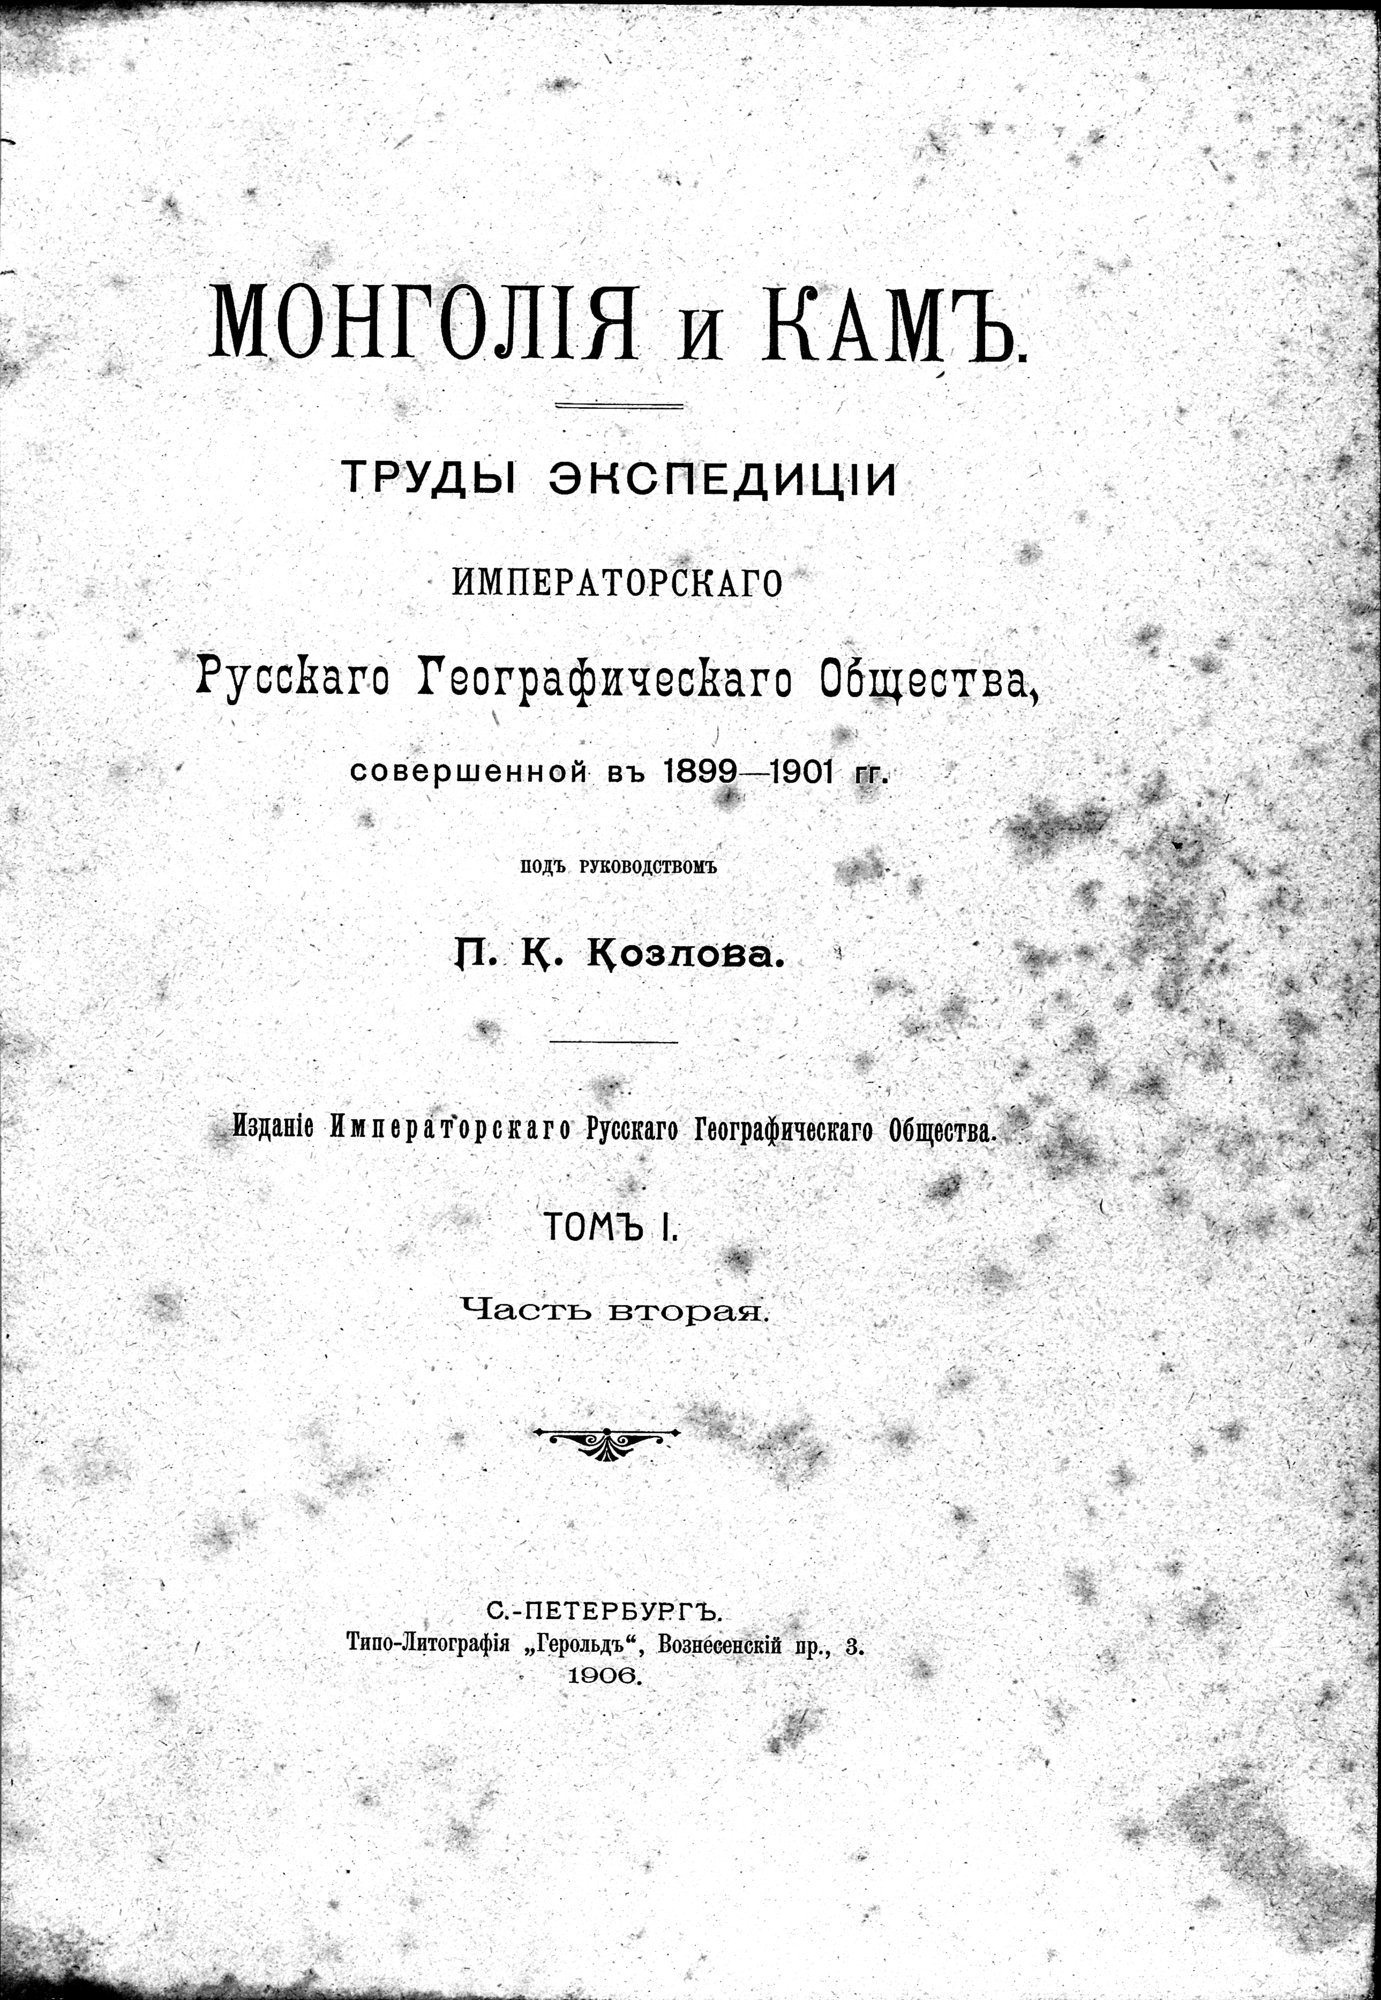 Mongoliia i Kam : vol.2 / Page 7 (Grayscale High Resolution Image)